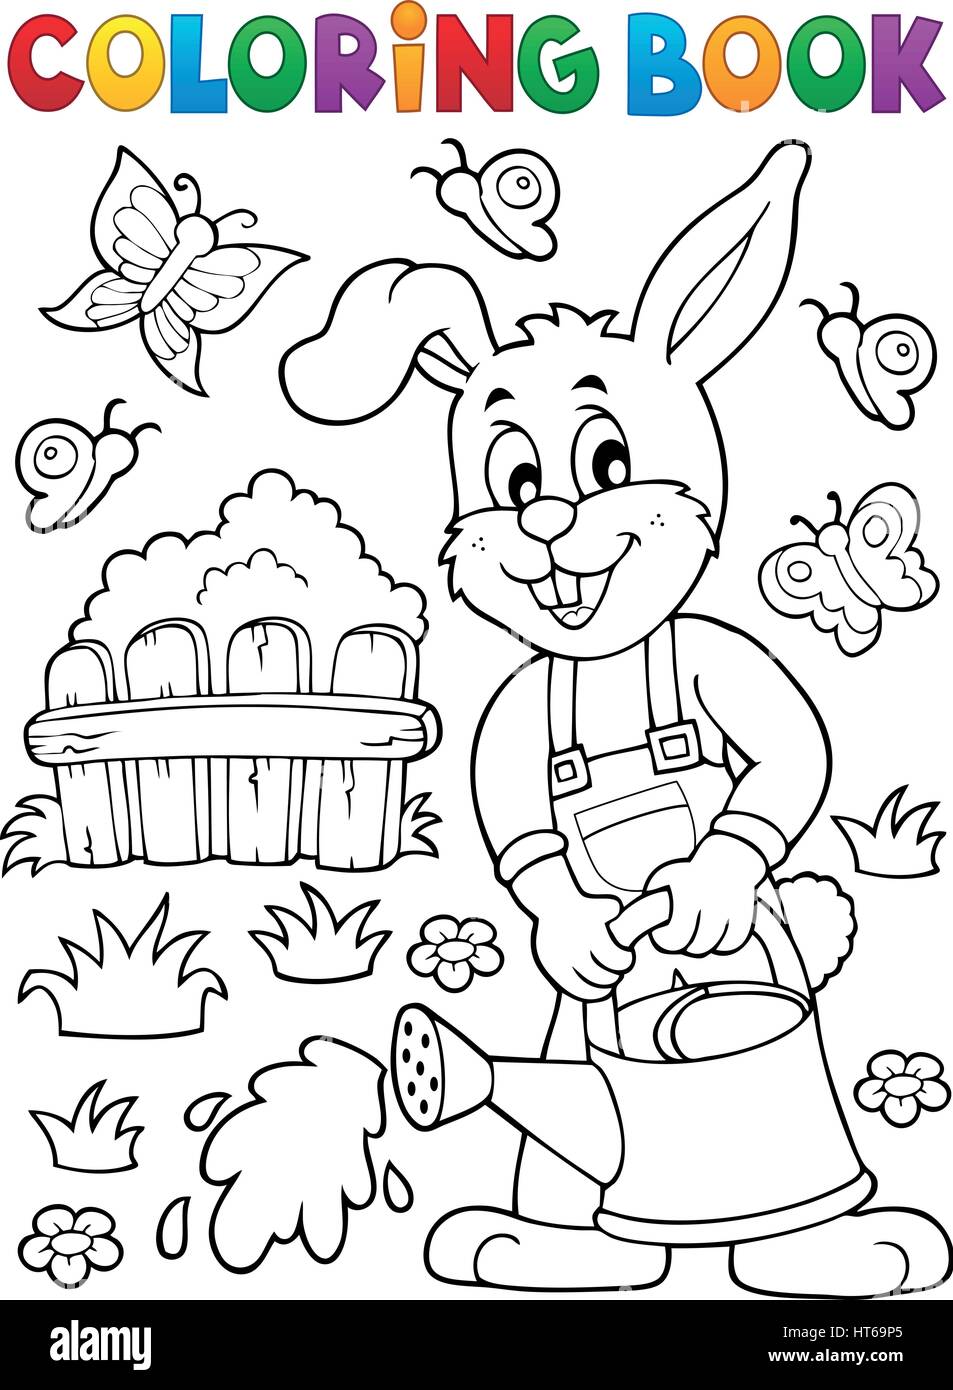 Coloring book rabbit gardener theme 2 - eps10 vector illustration. Stock Vector